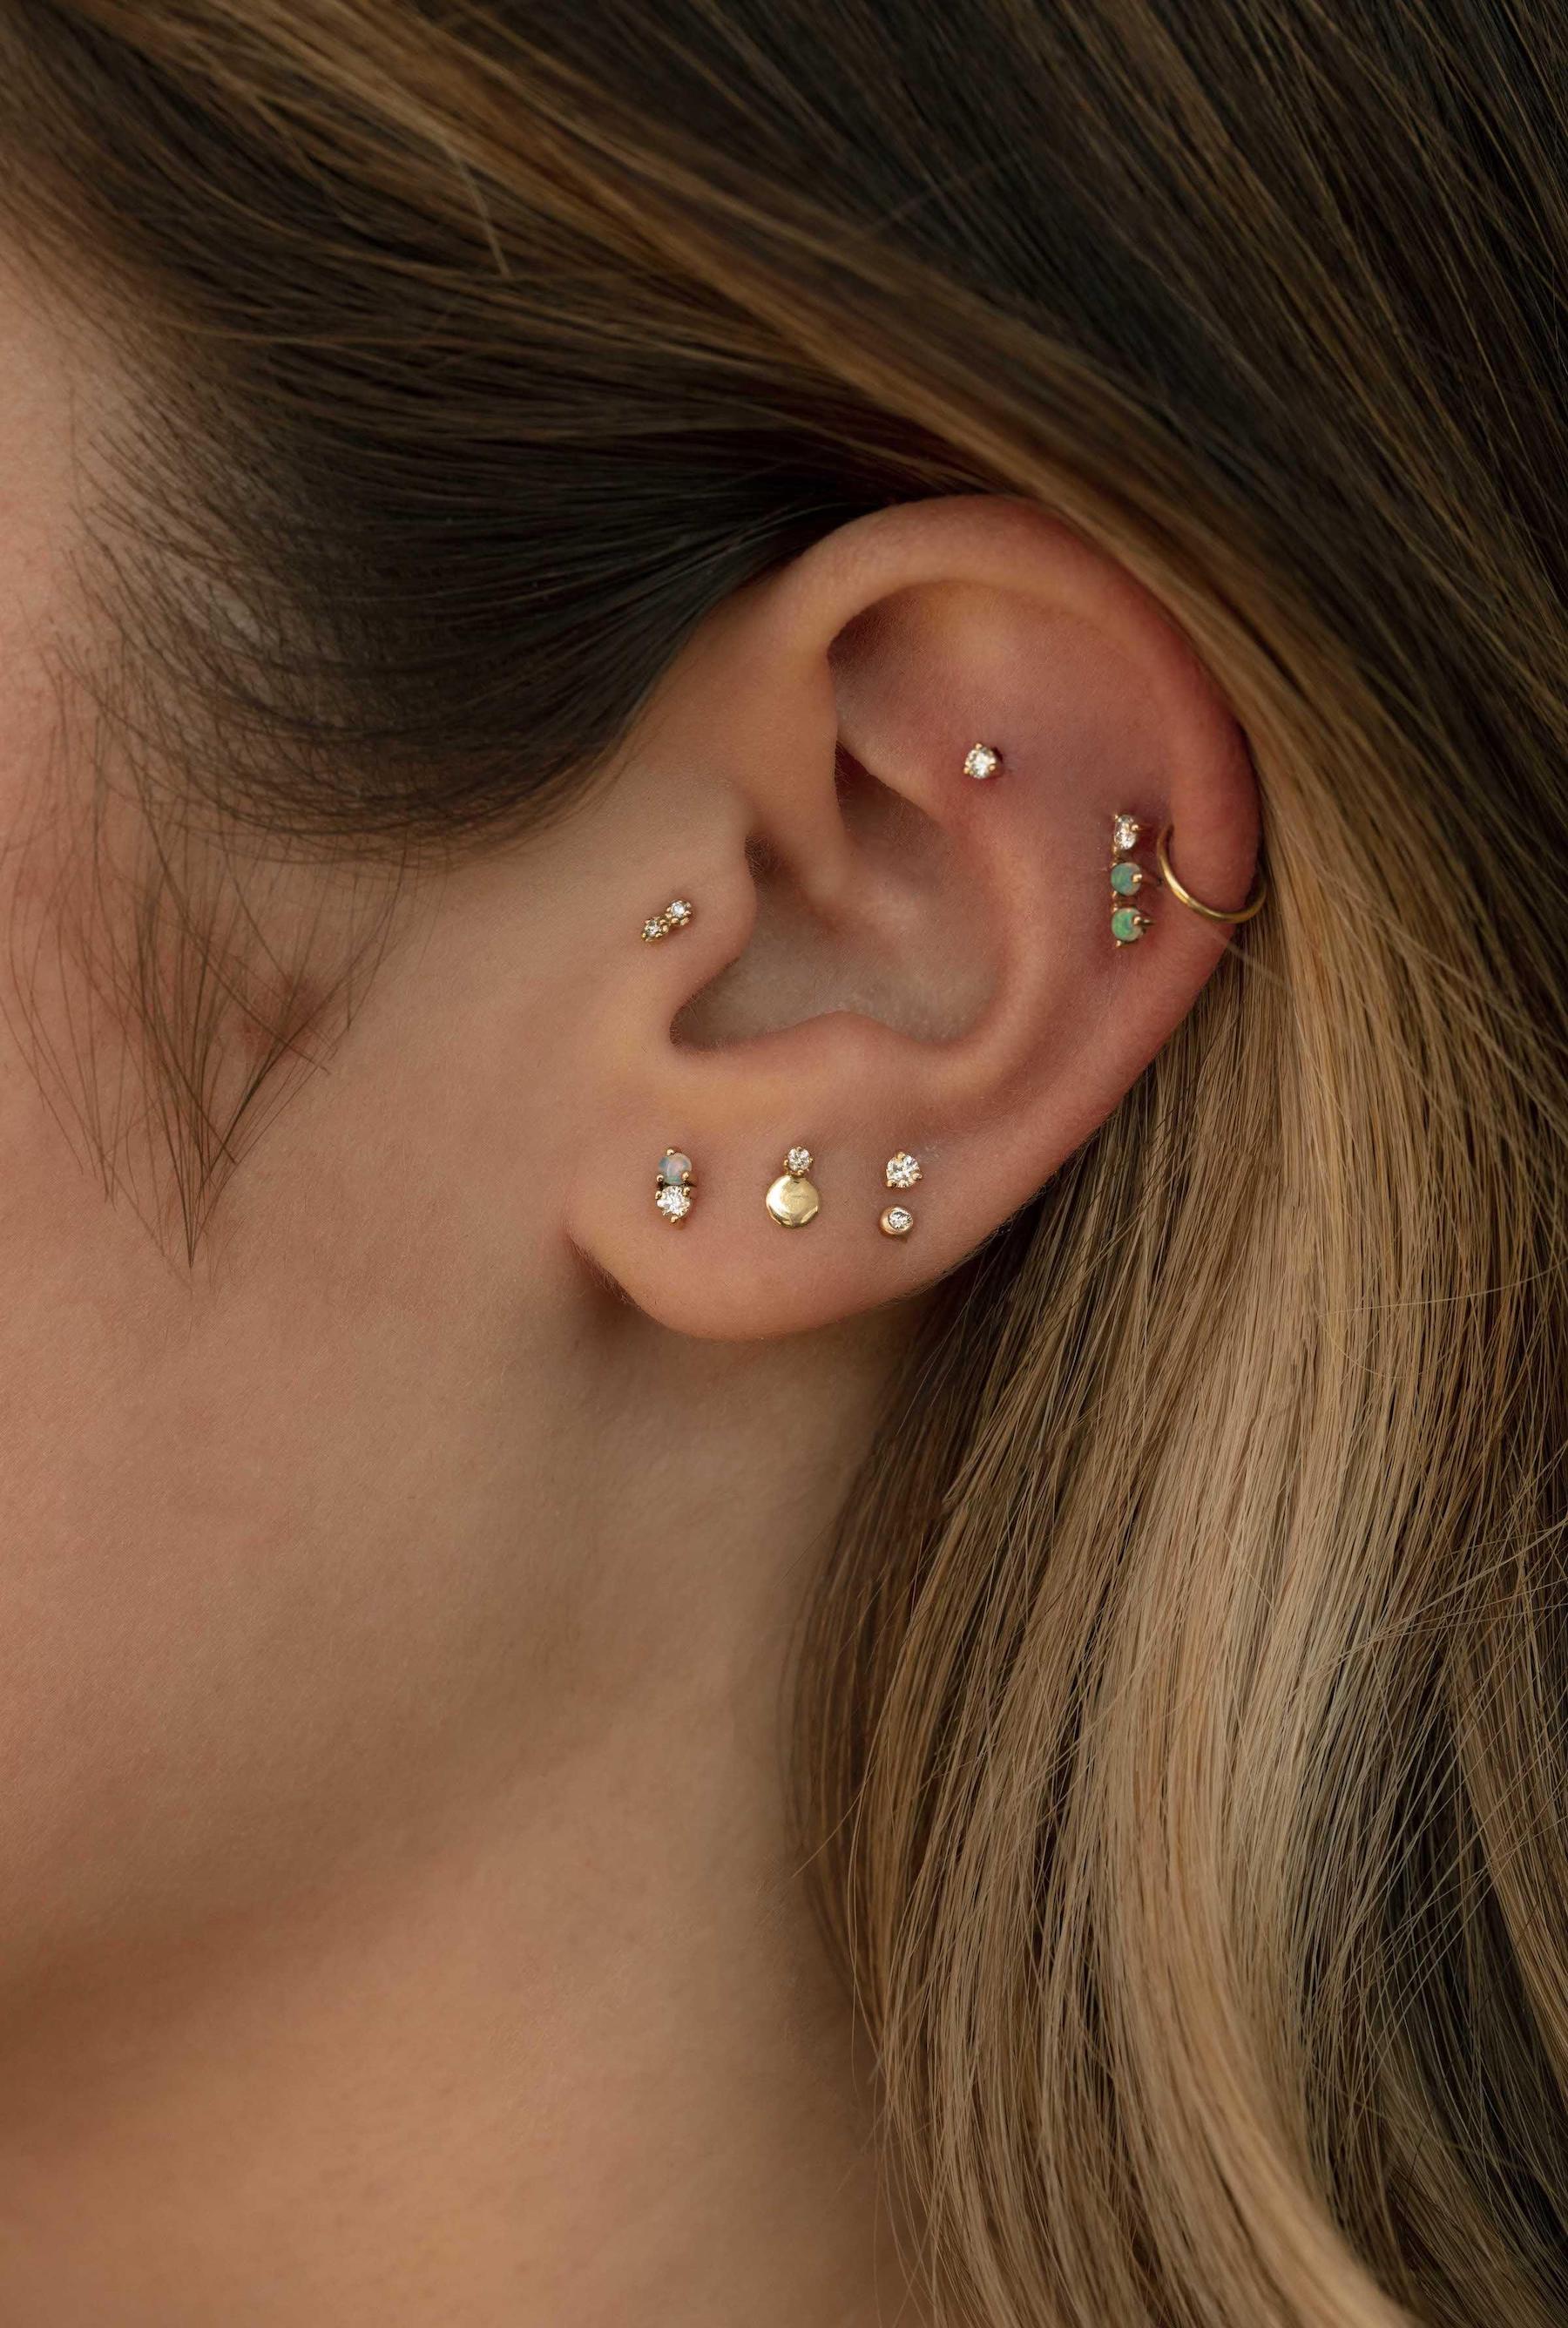 Skull and Crossbones flat back earrings – Dana Reed Designs